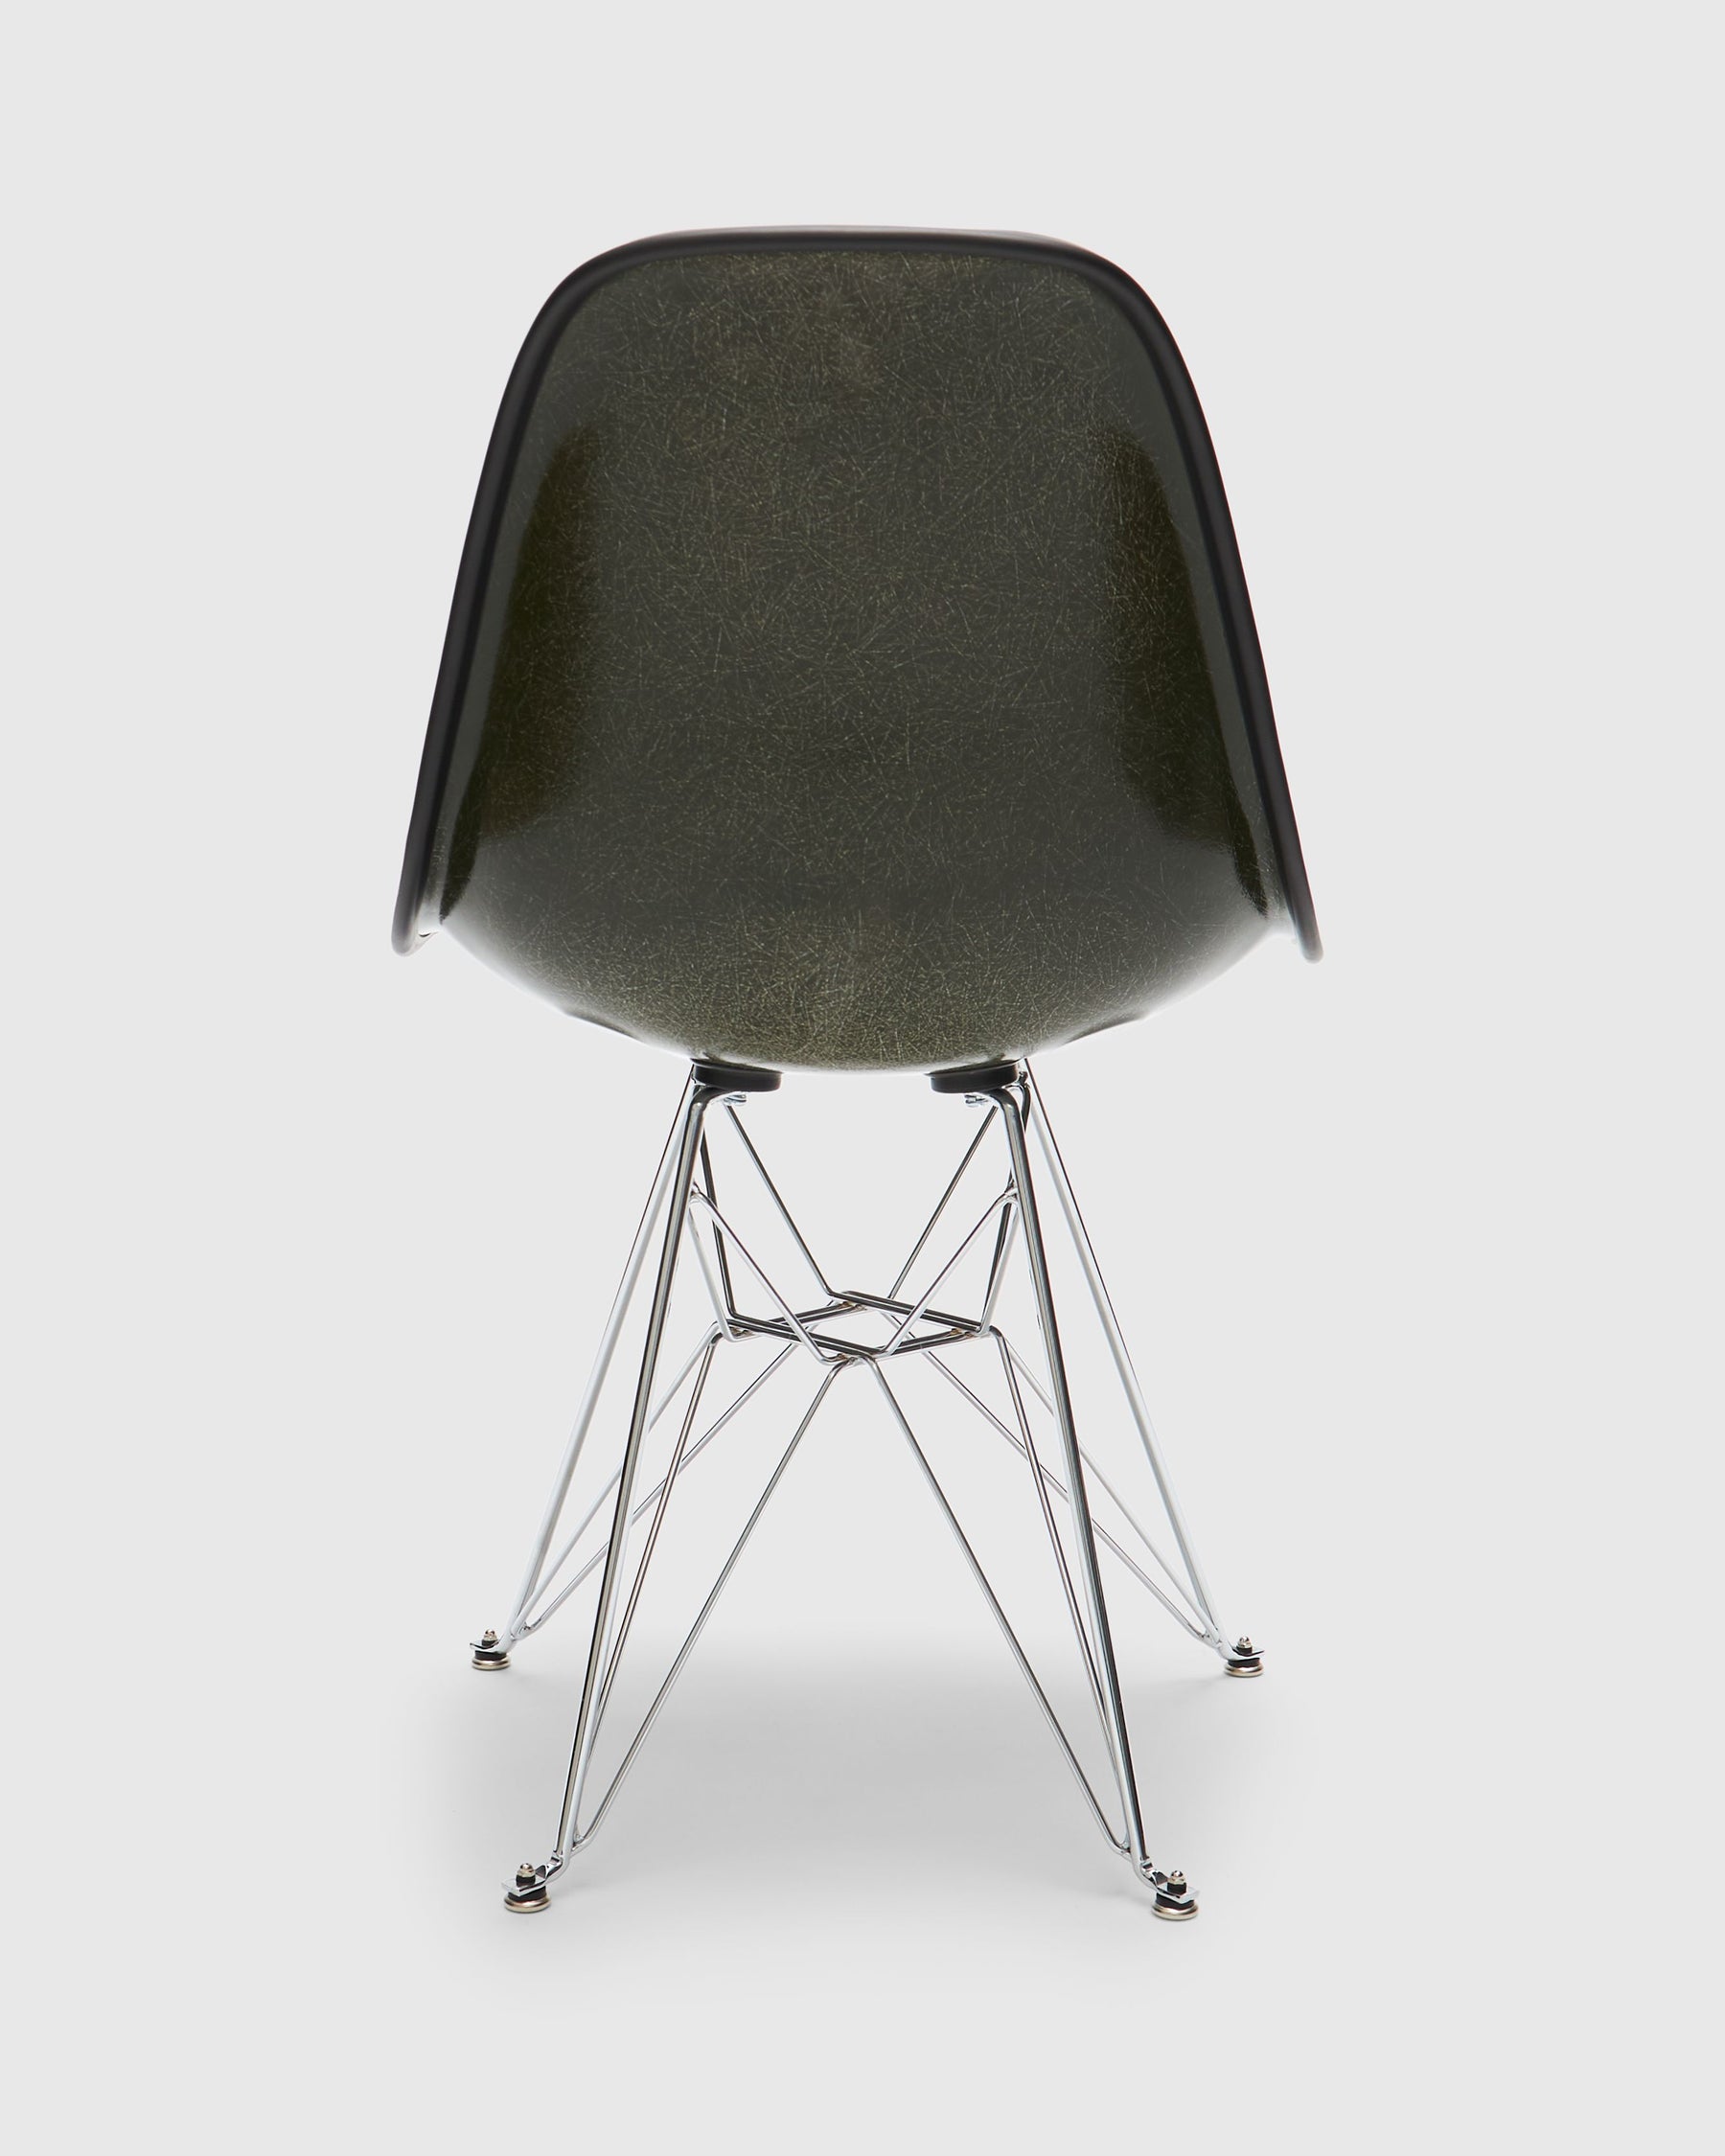 NERD Modernica Shell Chair in Camo